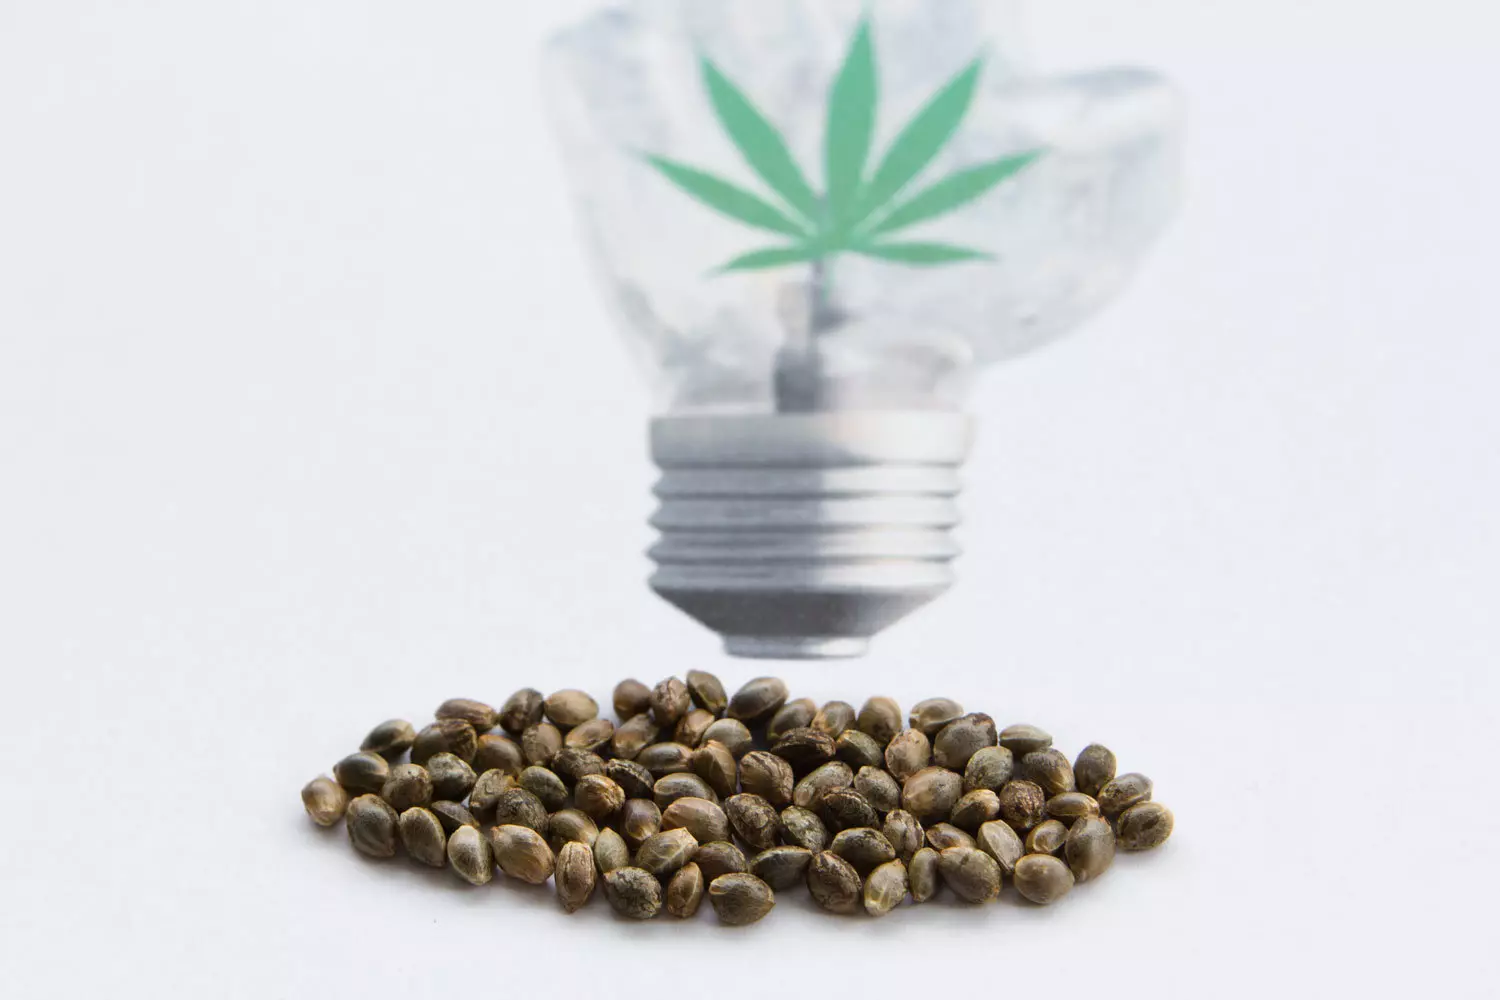 All about auto-flowering marijuana seeds